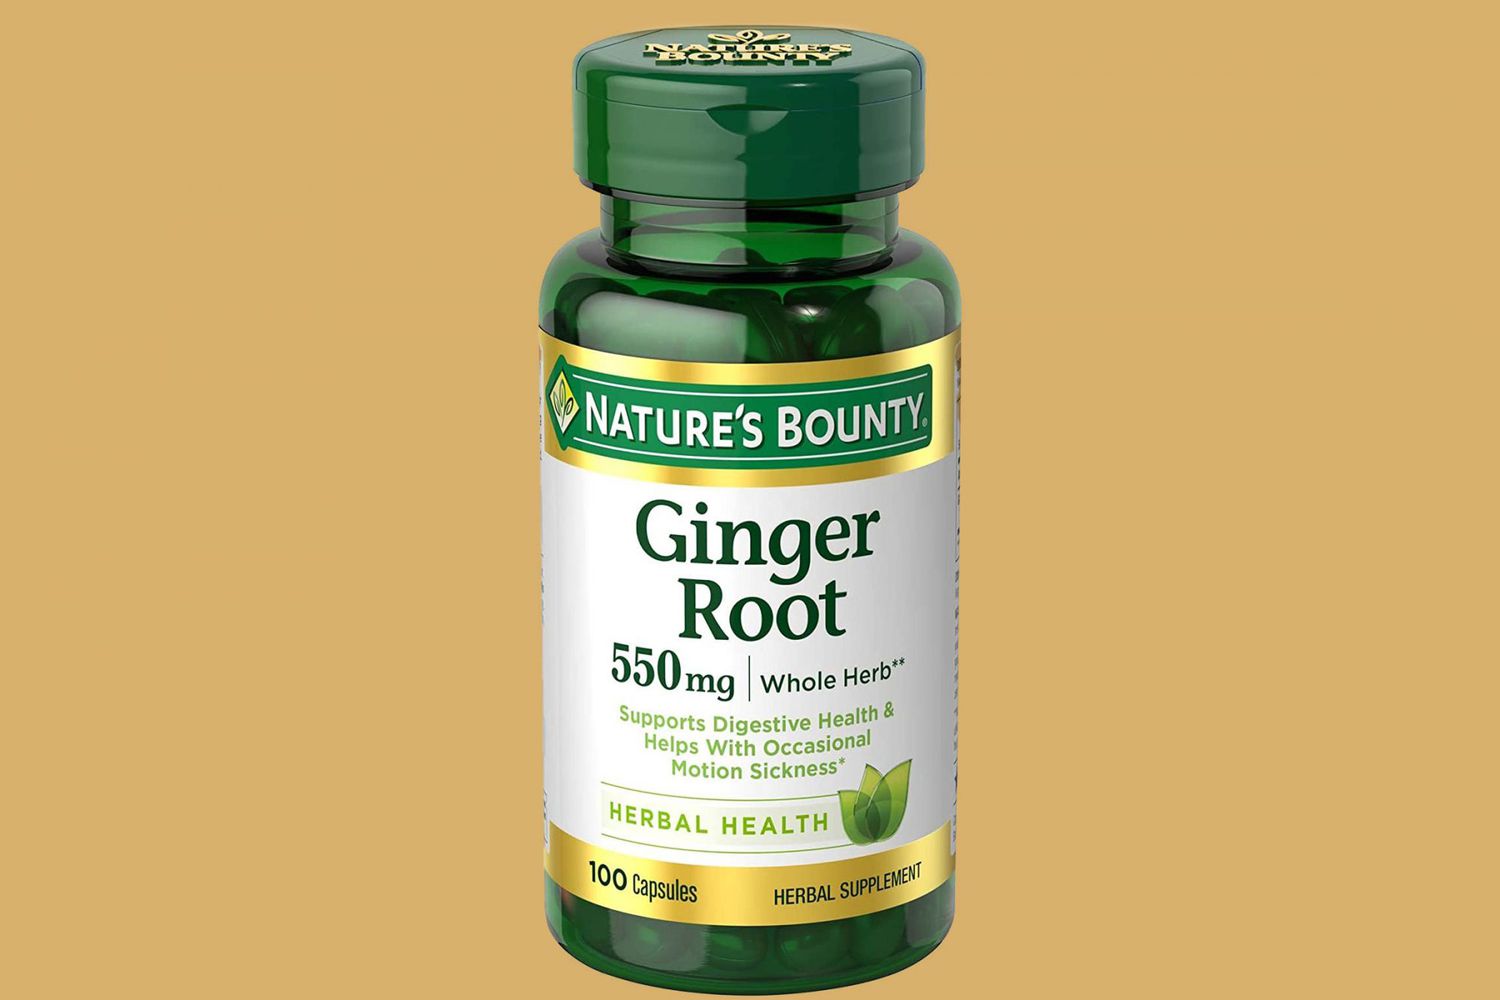 Nature's Bounty Ginger Root Pills